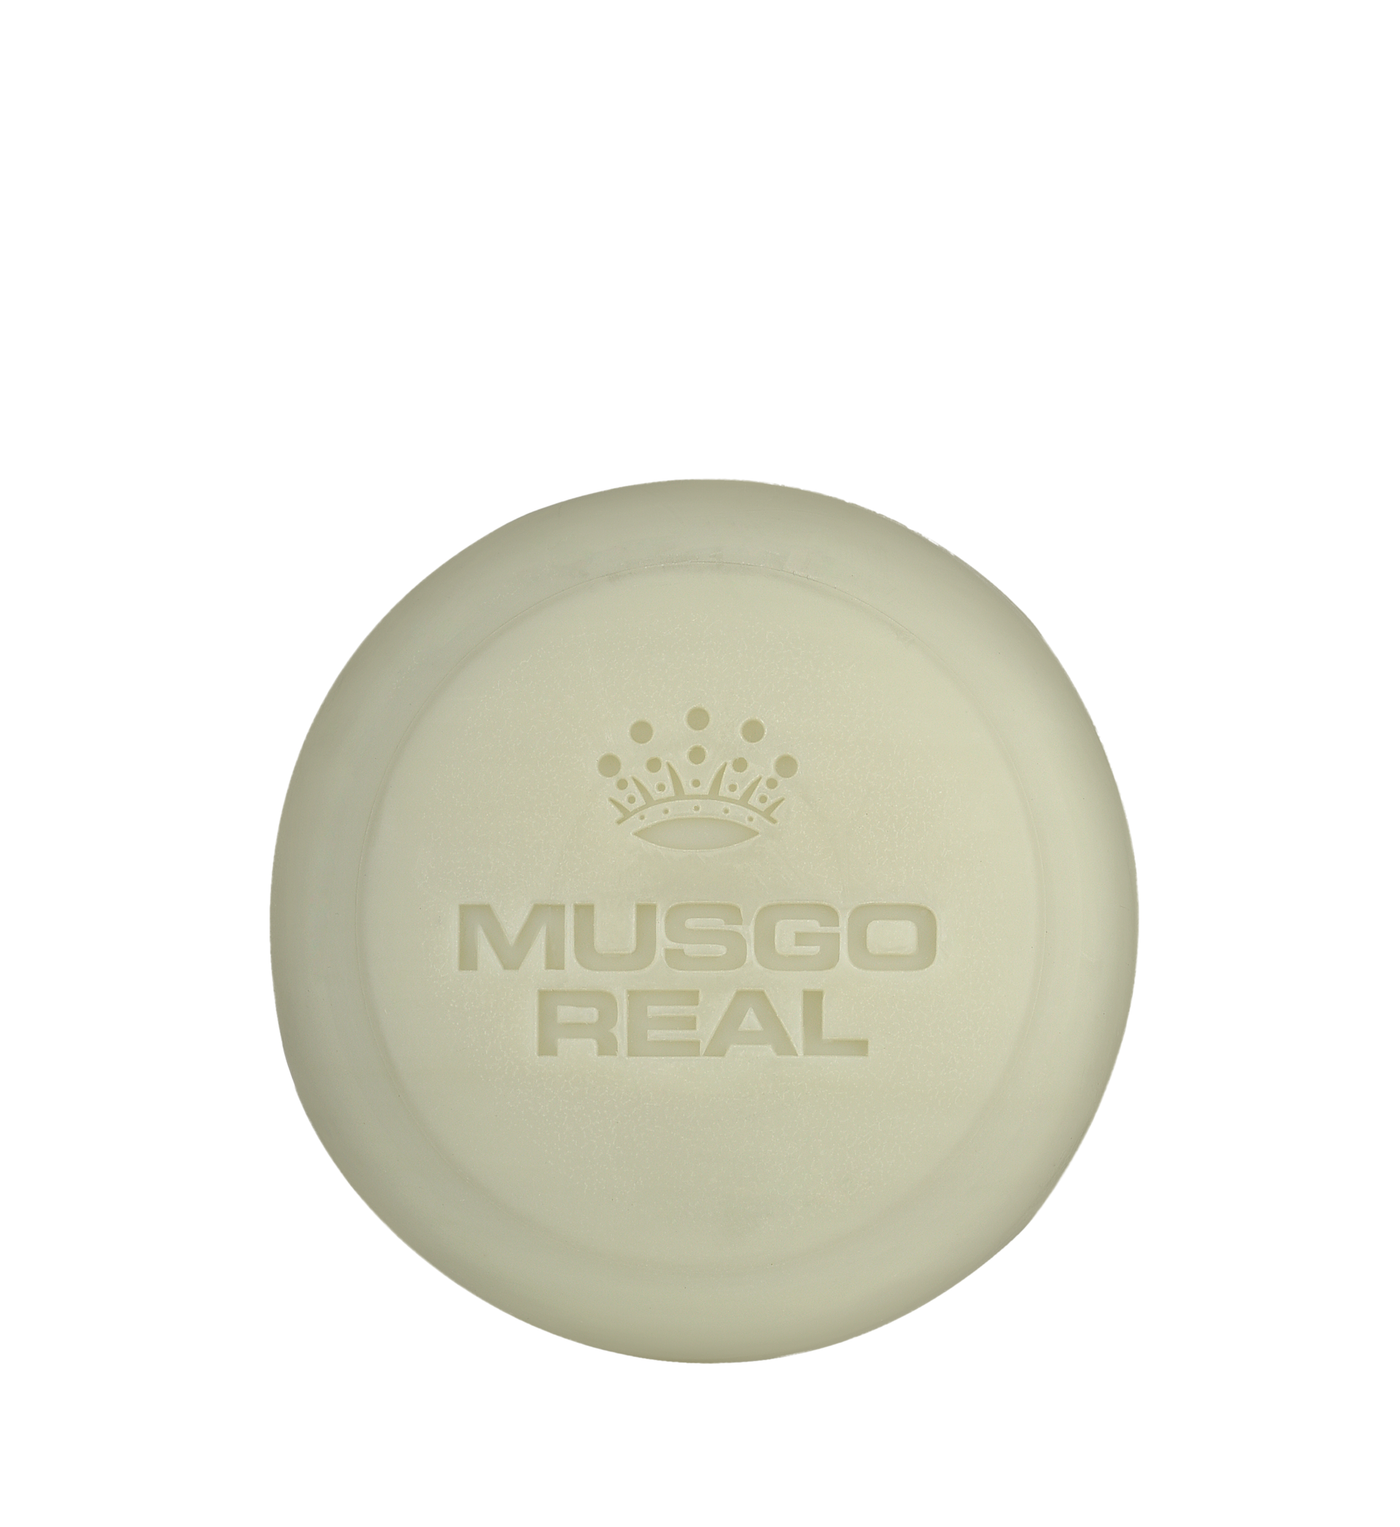 Musgo Shaving soap - Classic Scent